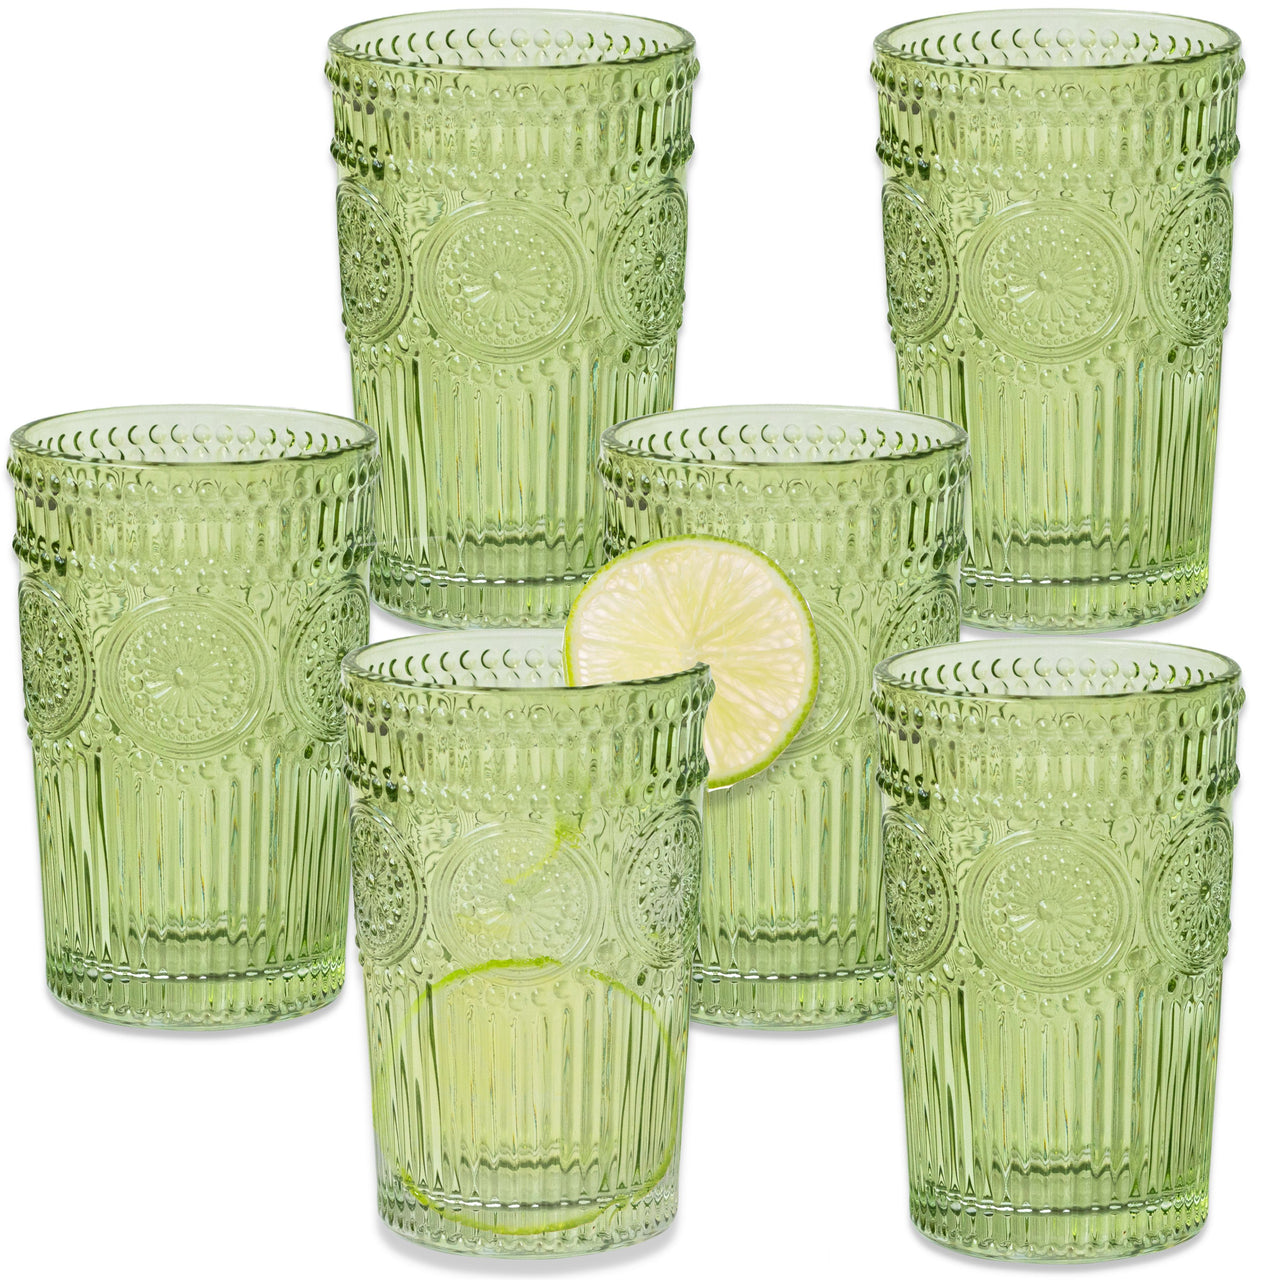 13 oz. Vintage Textured Sage Green Drinking Glass Cups (Set of 6) - Alternate Image 8 | My Wedding Favors